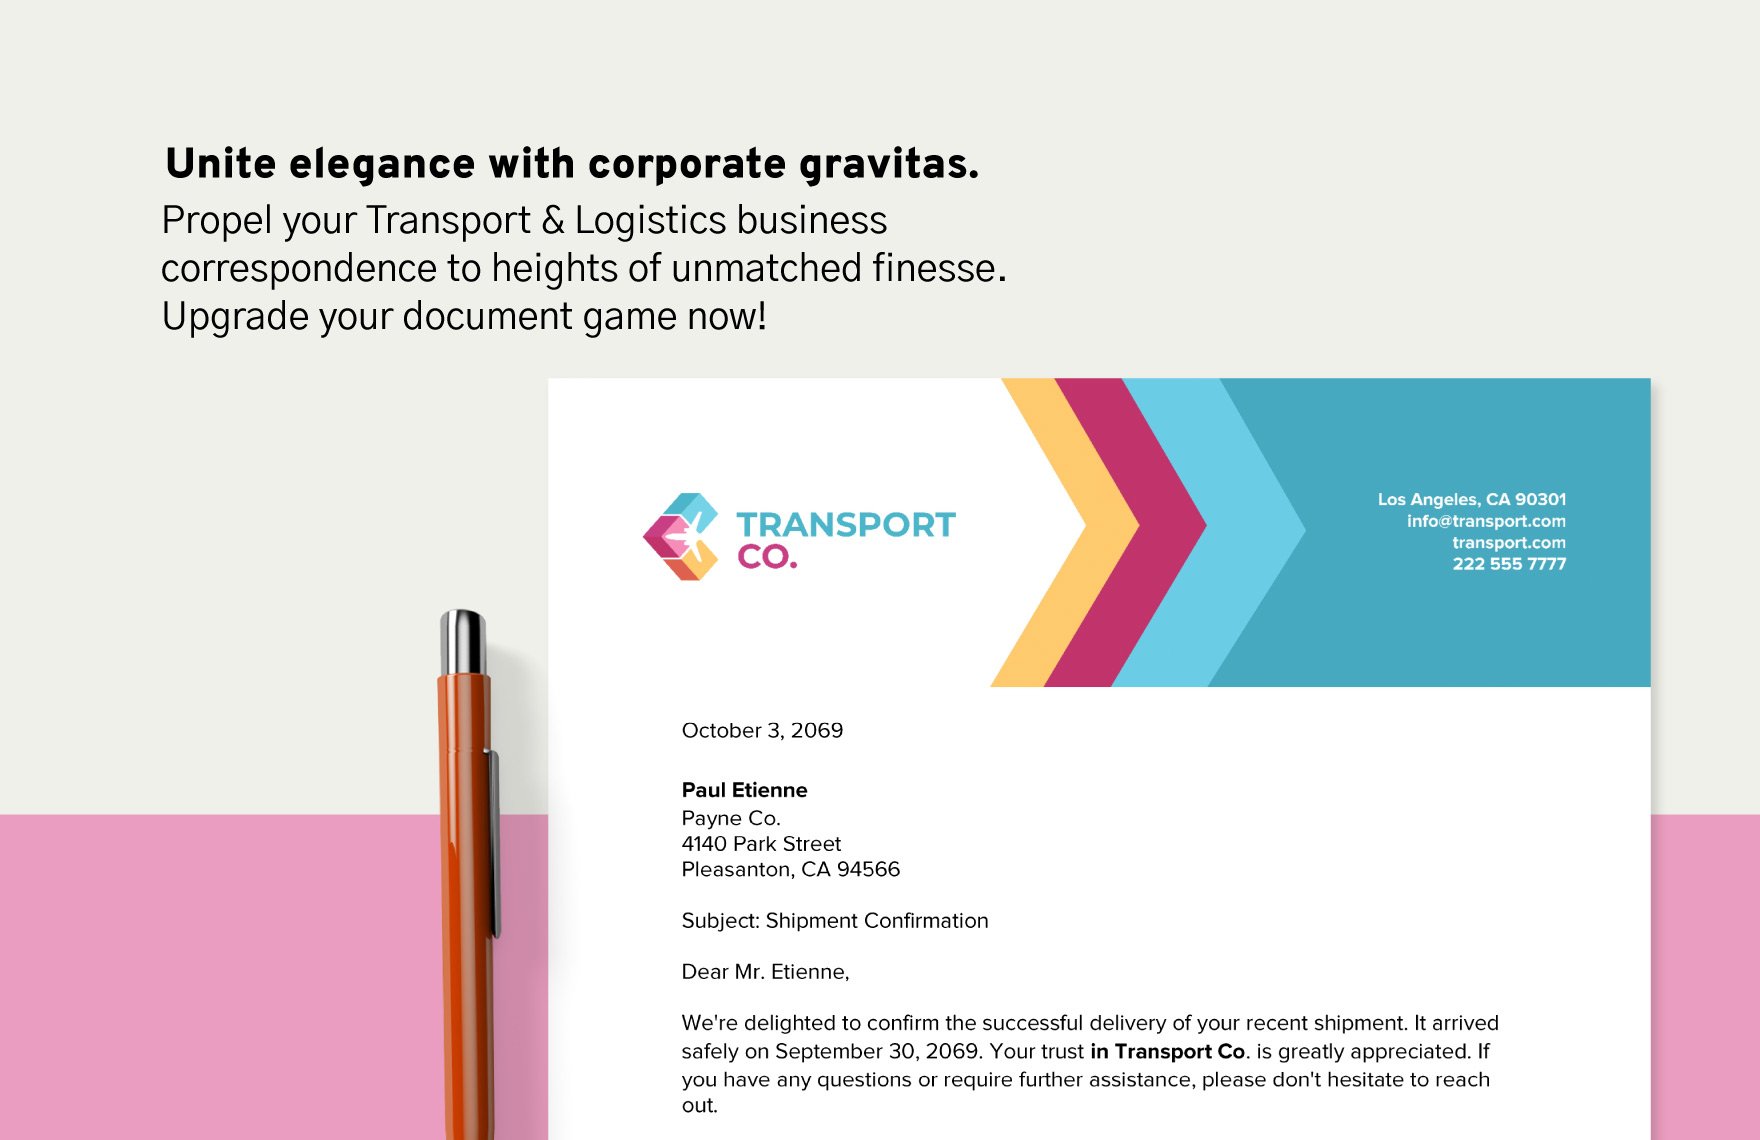 Transport and Logistics International Shipping Letterhead Template